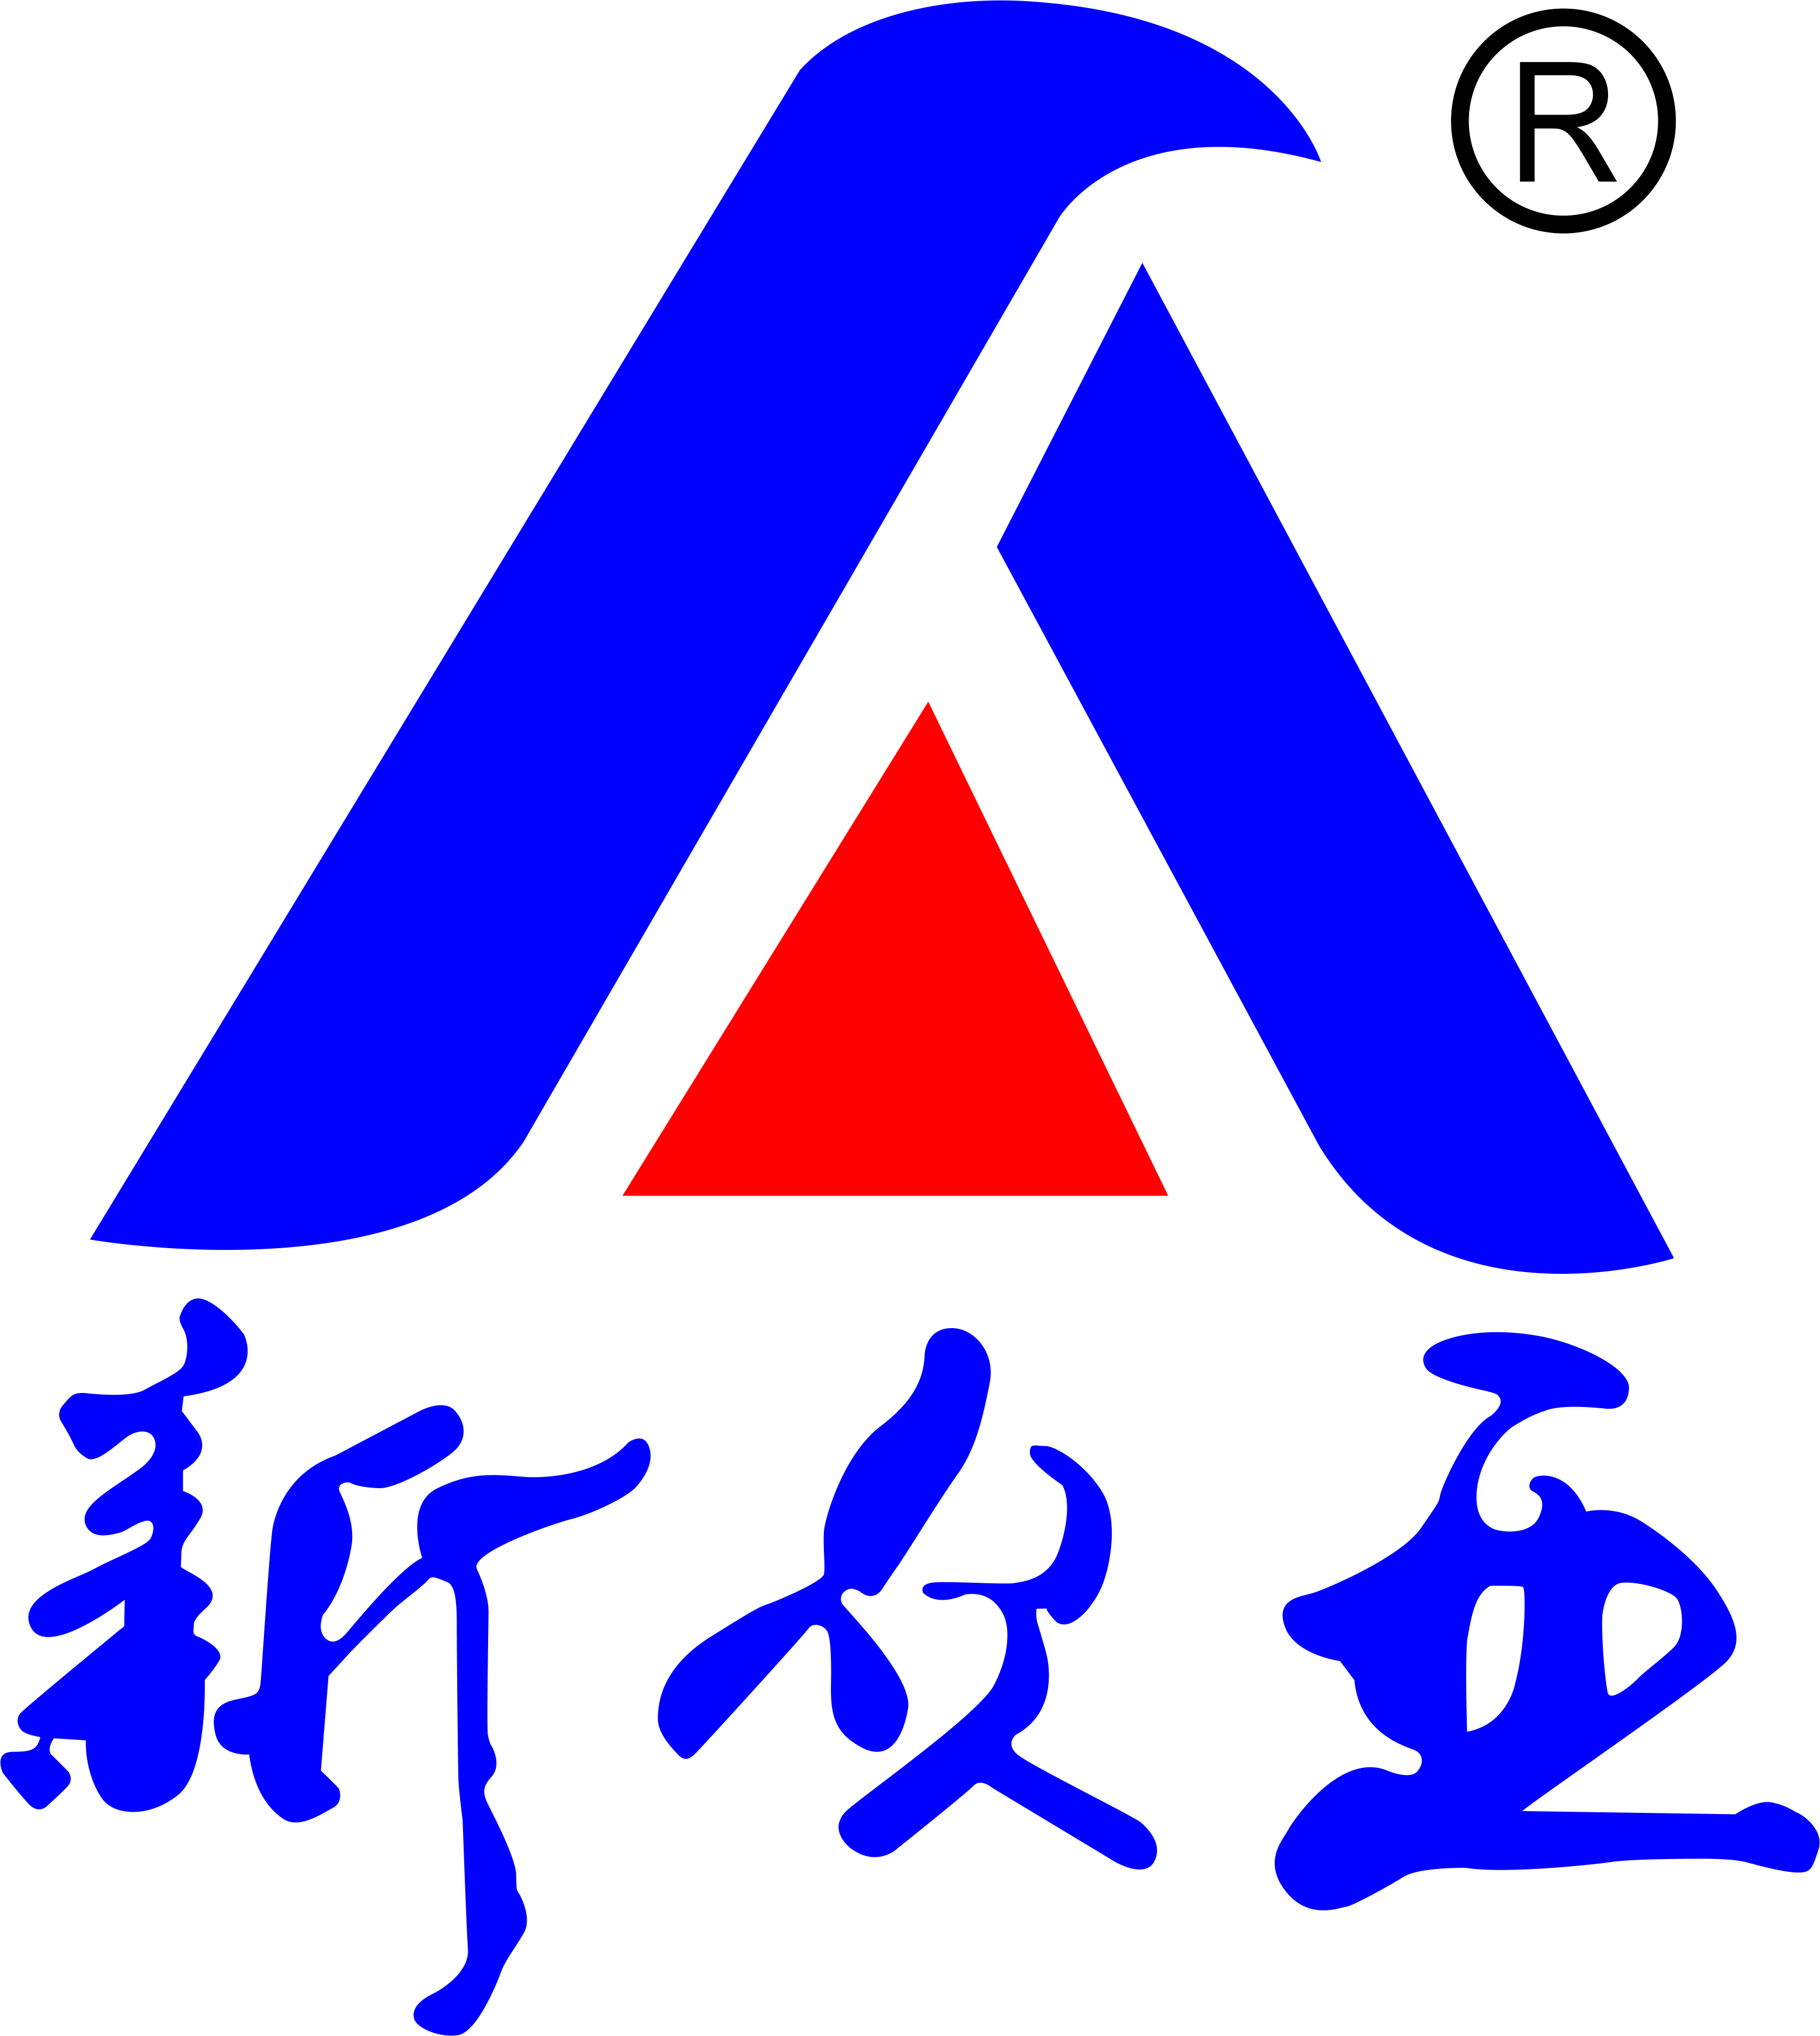 JIANGSU XINZHONGYA INTELLIGENT LOGISTICS EQUIPMENT MANUFACTURING CO.,LTD